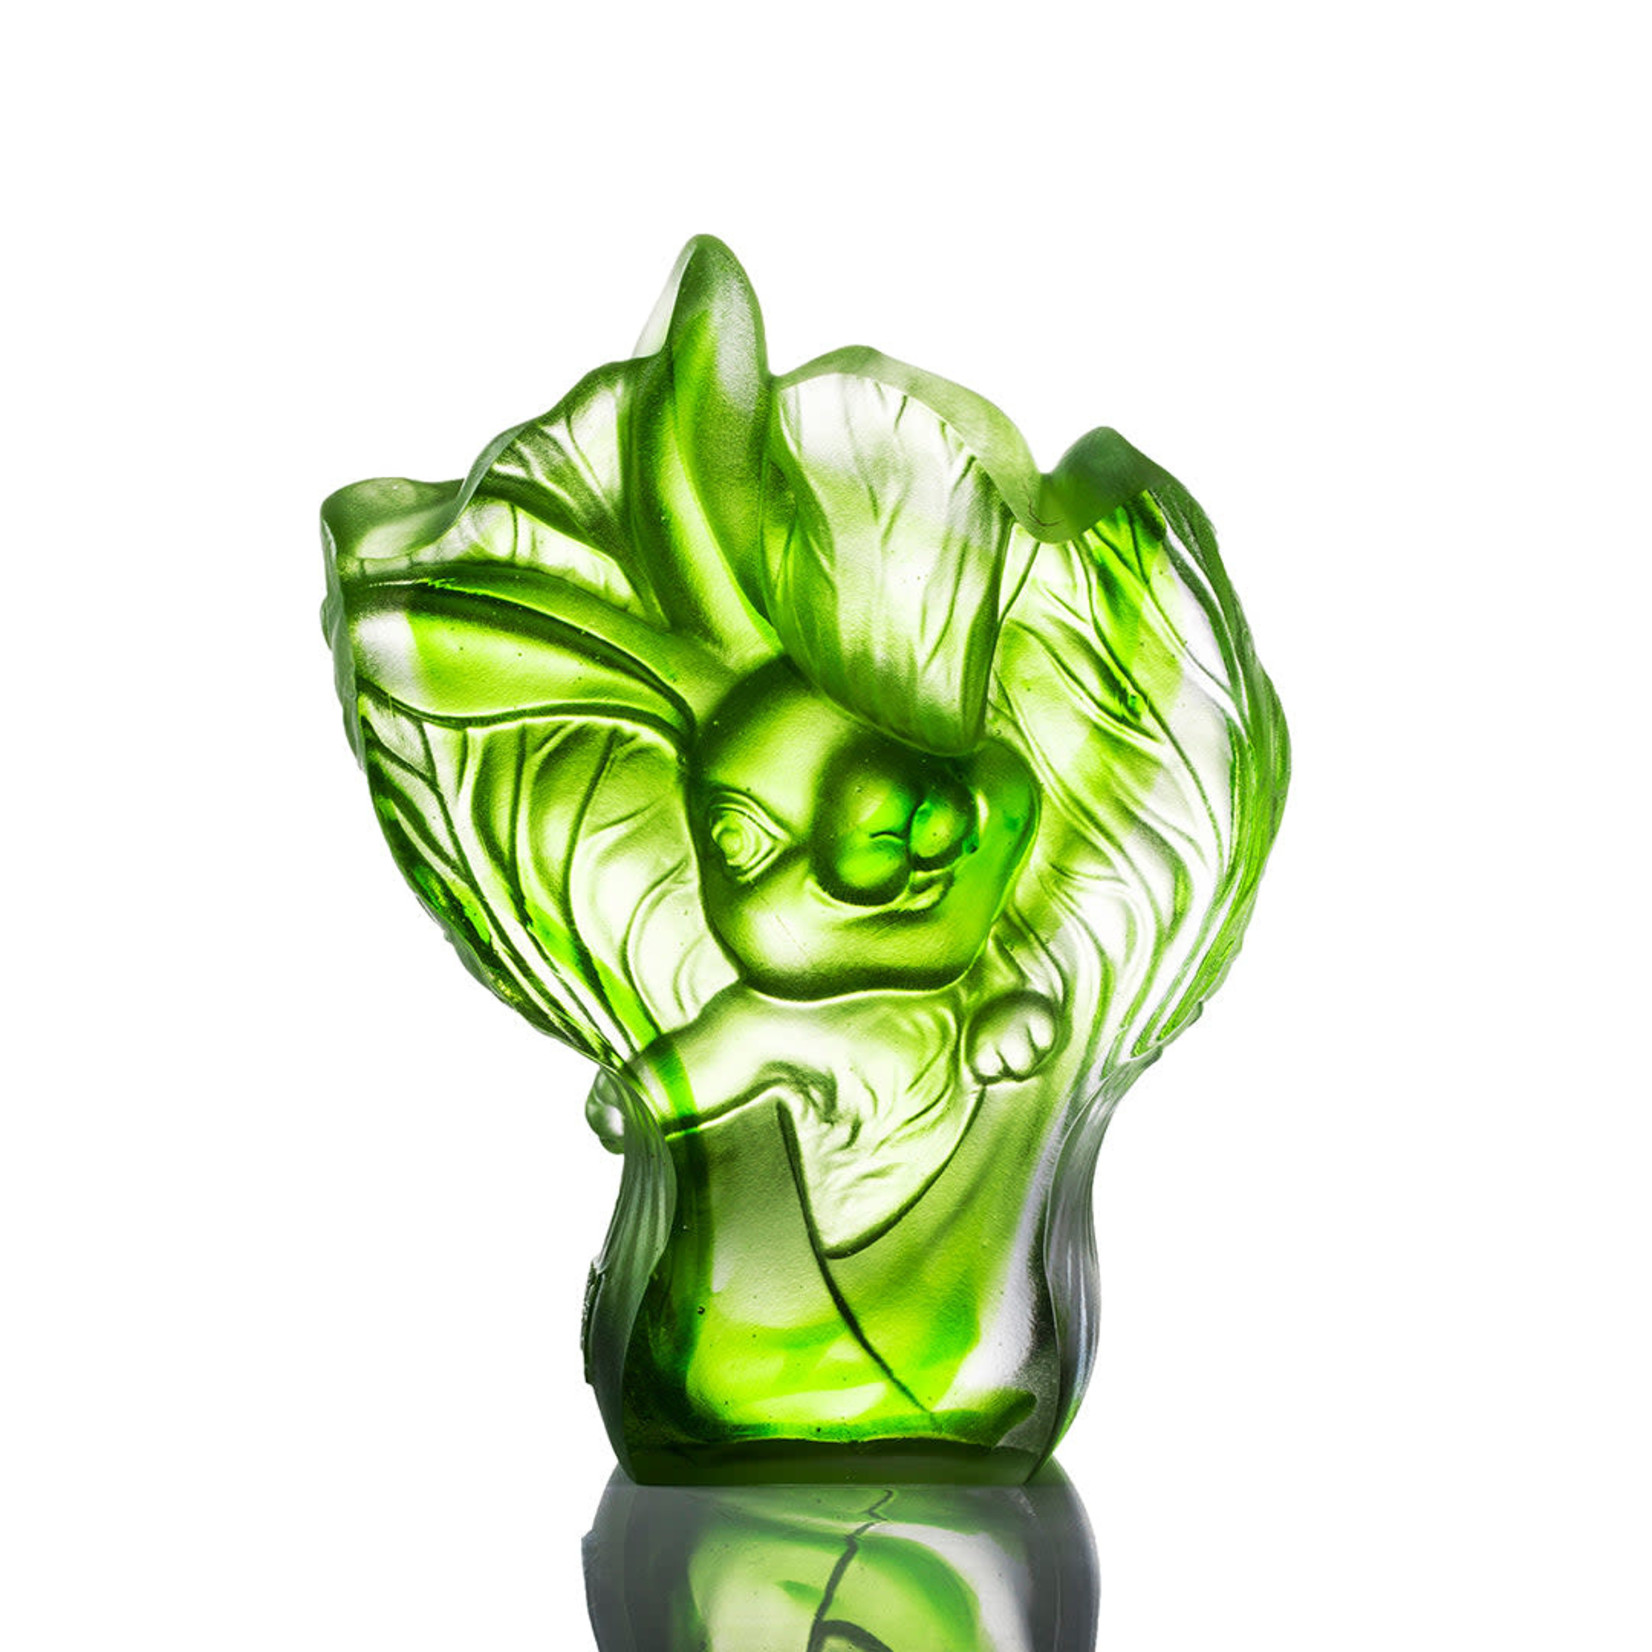 LIULI Crystal Art Crystal Rabbit, Year of the Rabbit, "Familiar, Fortuitous"